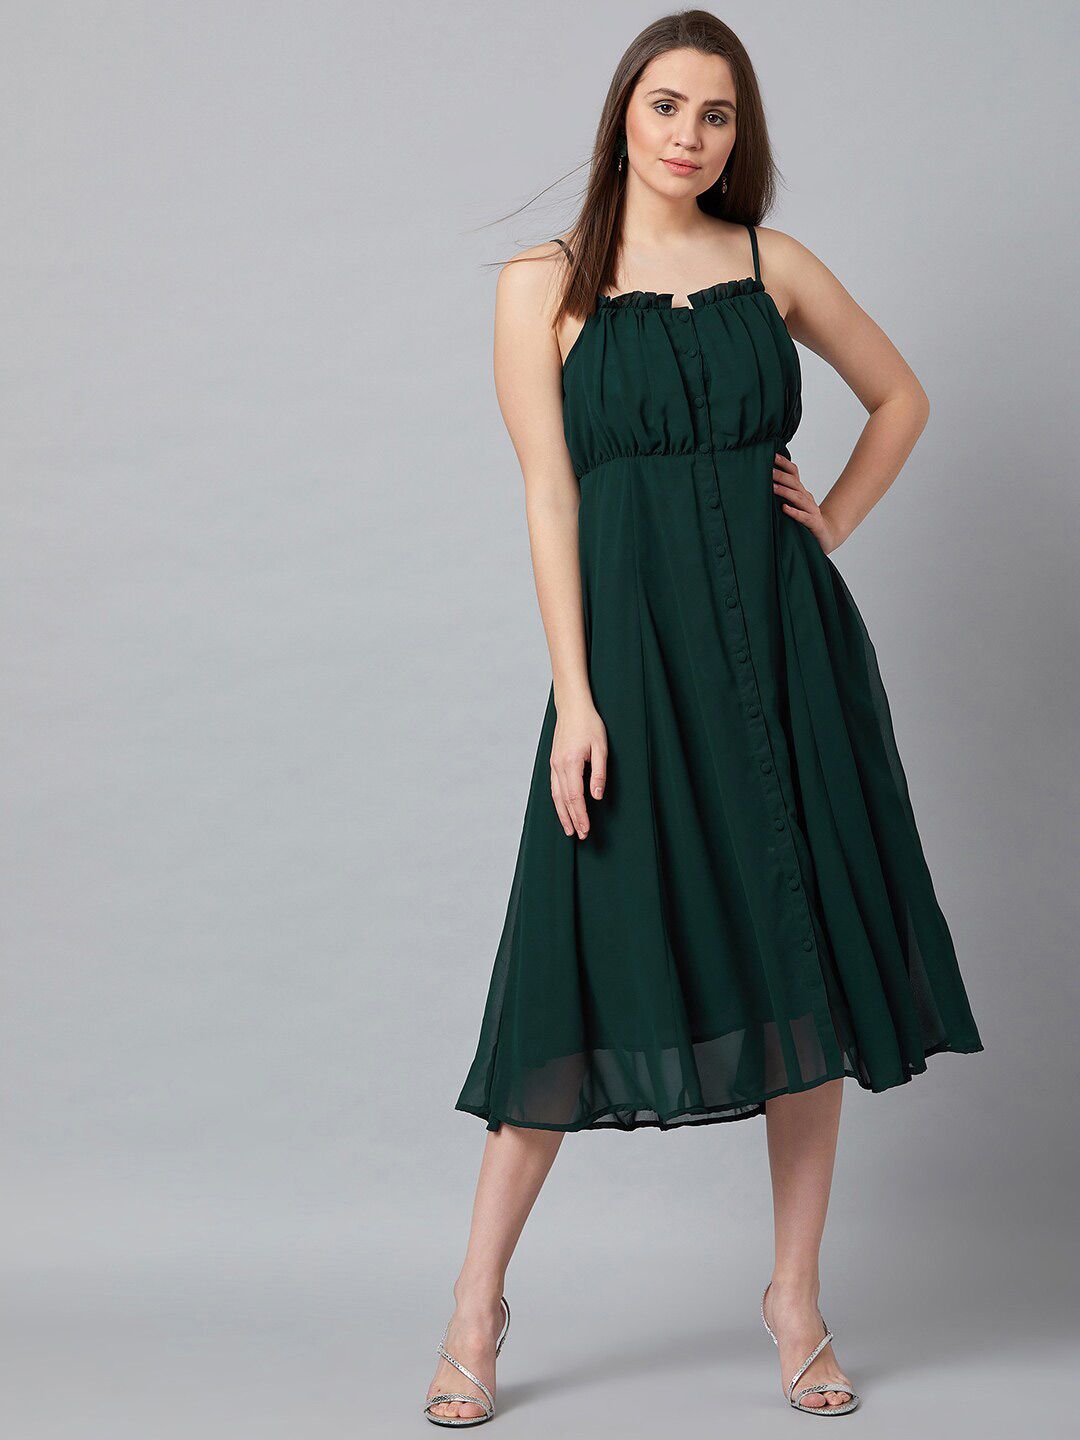 PANIT Green Georgette Midi Dress Price in India